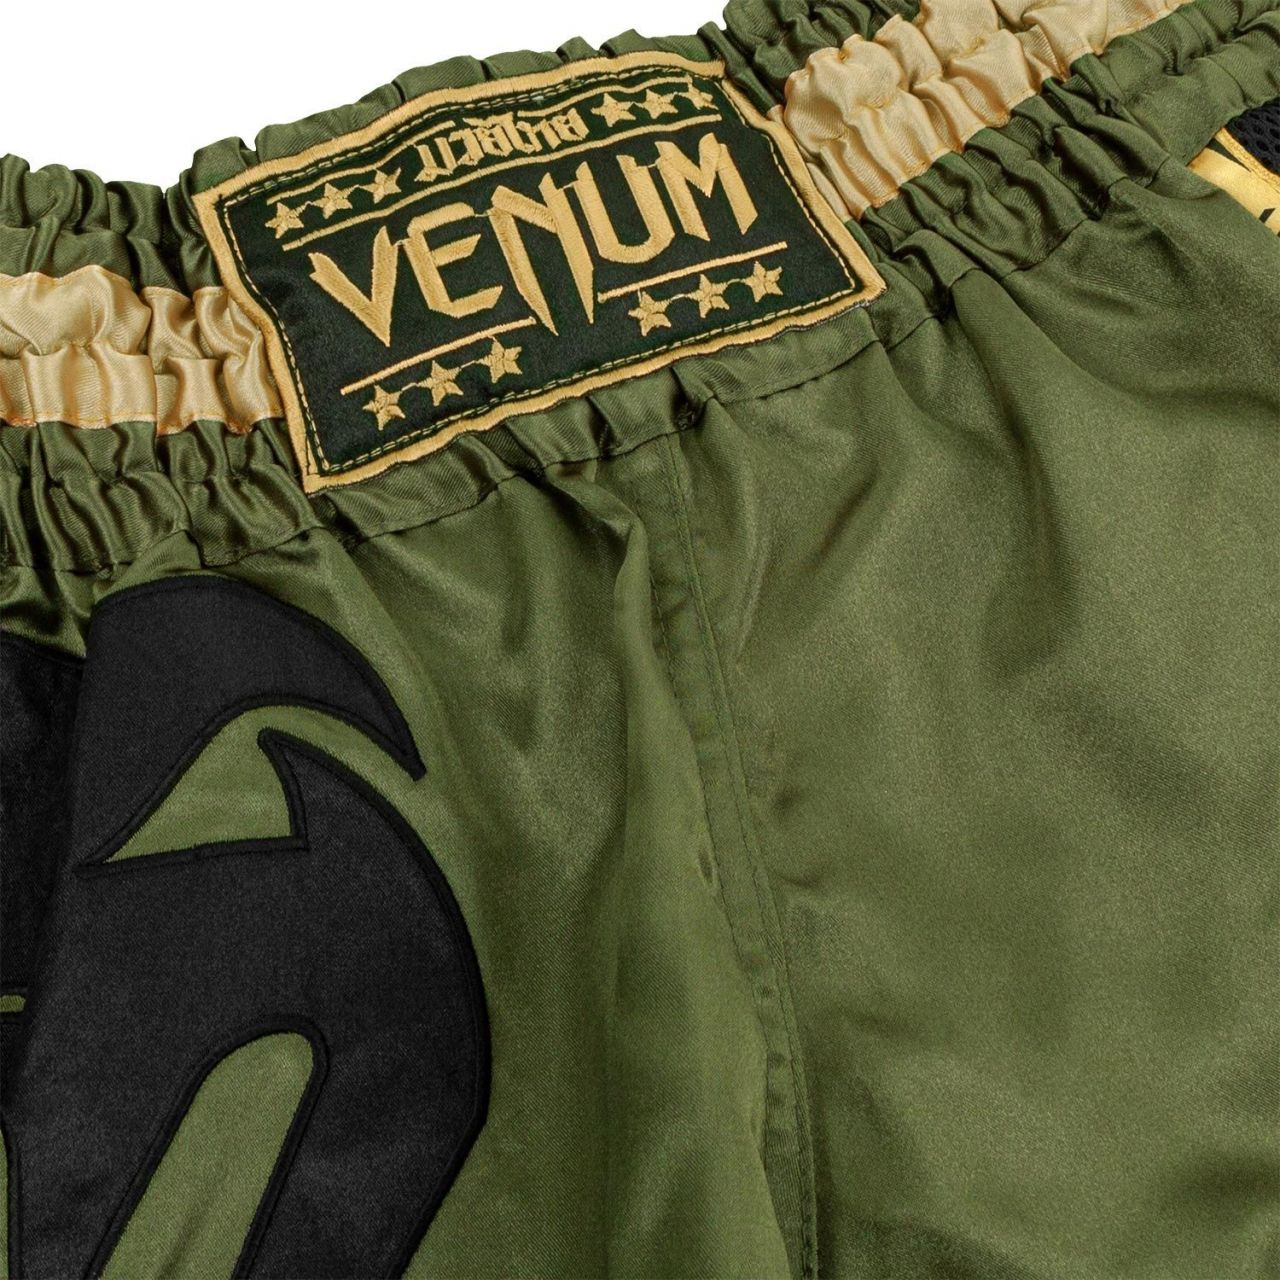 Venum Giant Muay Thai shorts